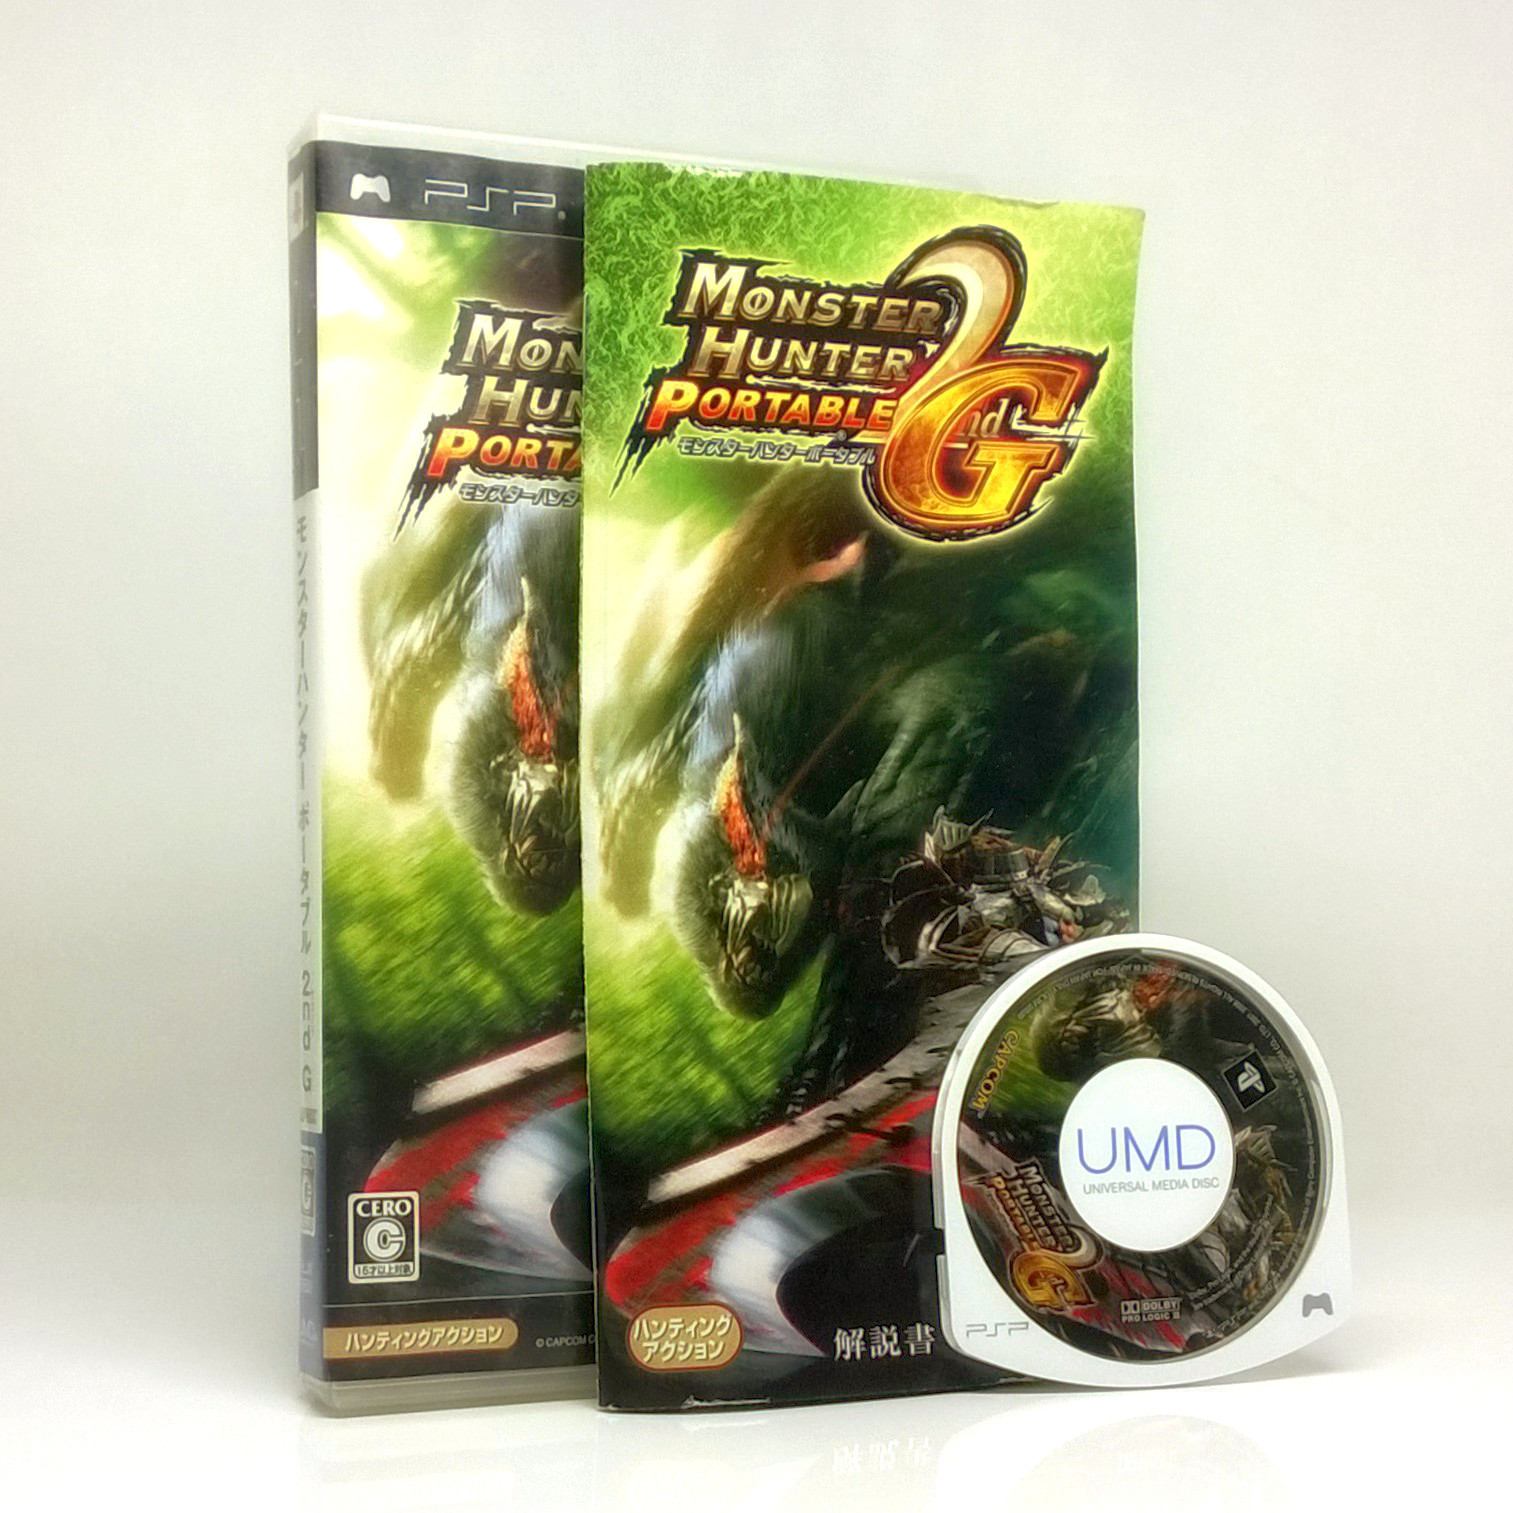 Monster Hunter Portable 2nd G Import PlayStation Portable PSP Game